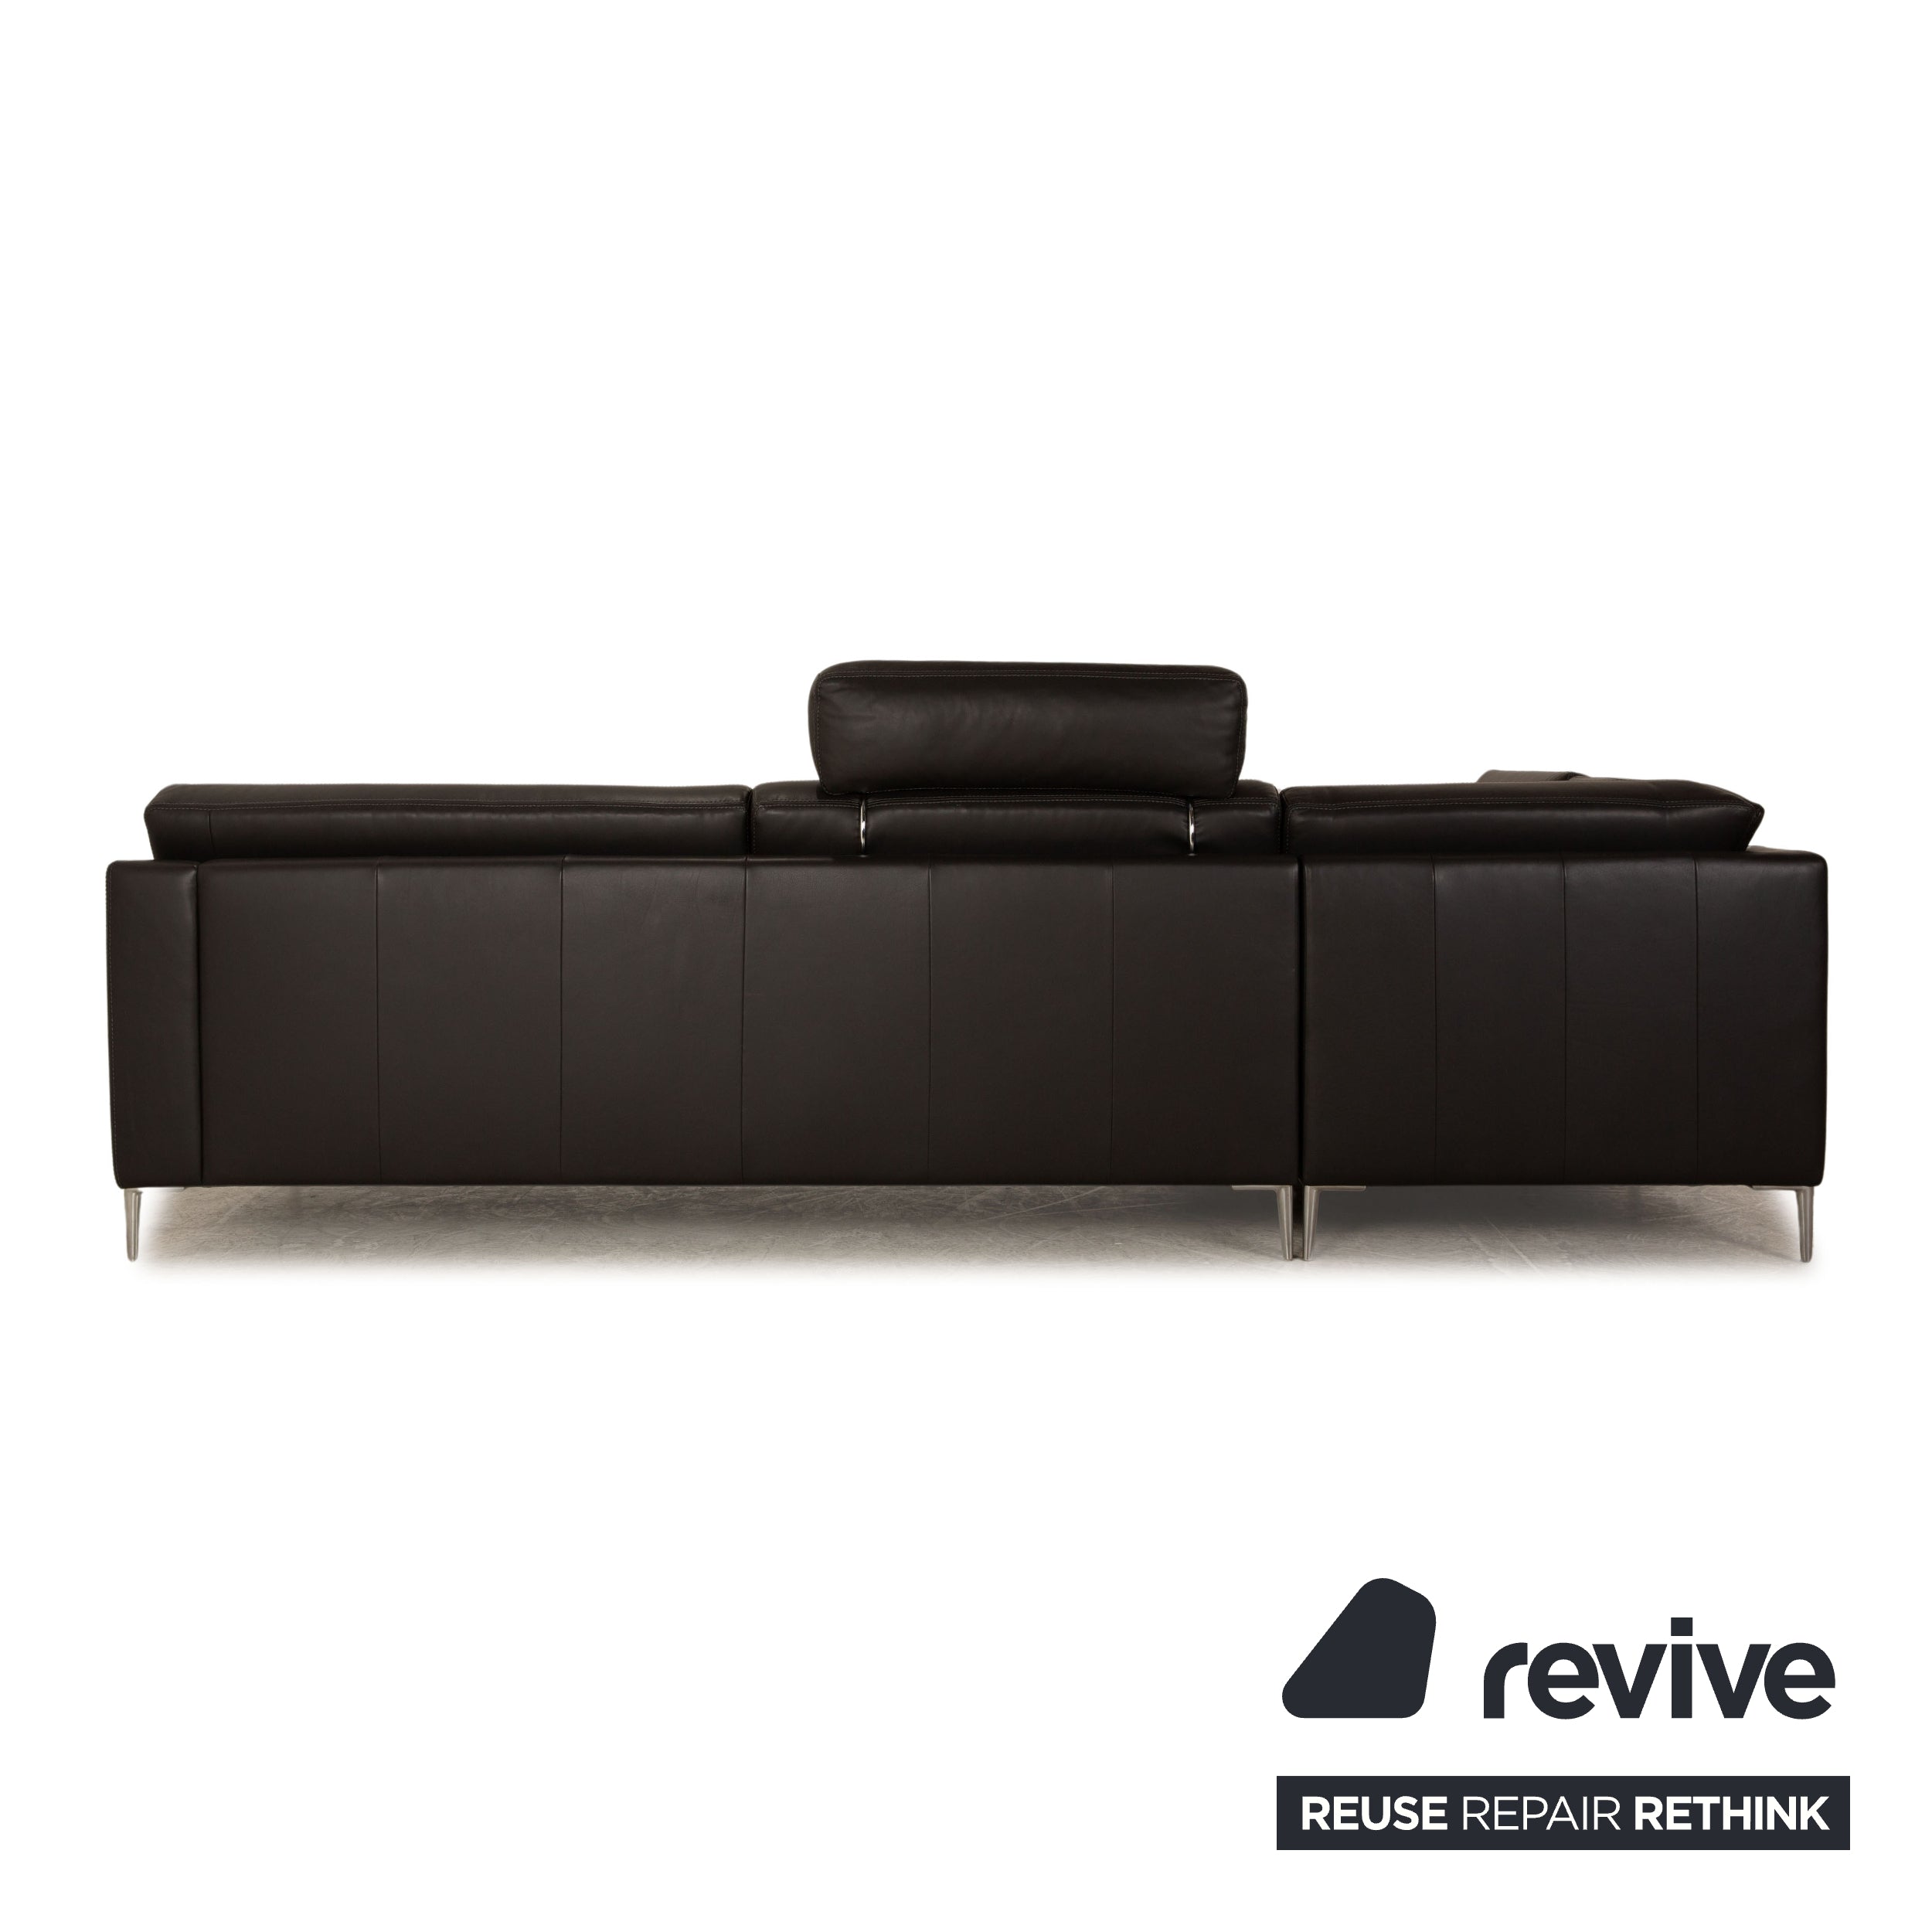 Erpo CL 650 Leder Ecksofa Anthrazit Sofa Couch Recamiere Links